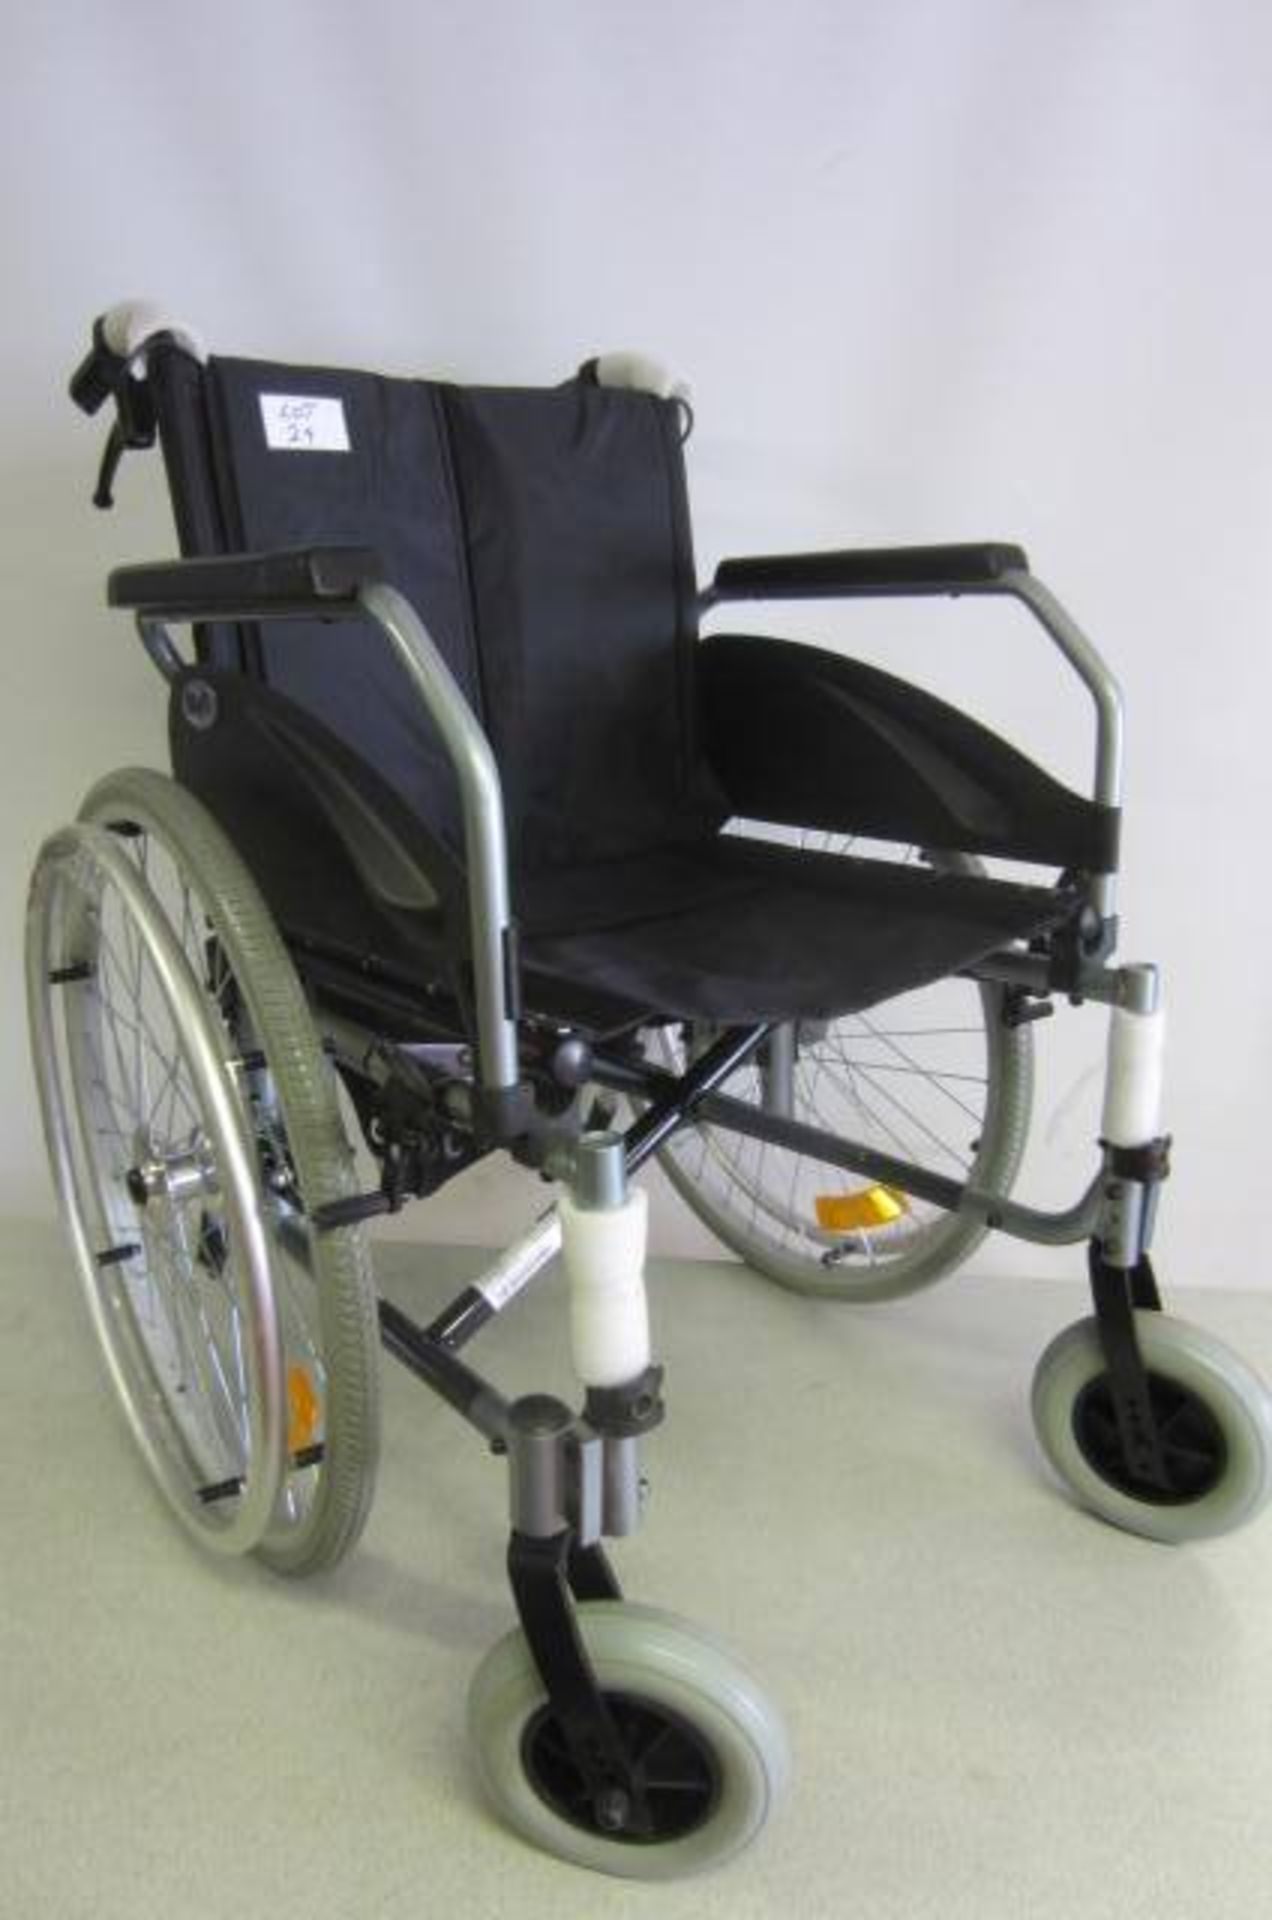 Days Patterson Medical Rollstuhl Self Propolled Wheel Chair, Model Casa Move LR. Ex Display, Missing